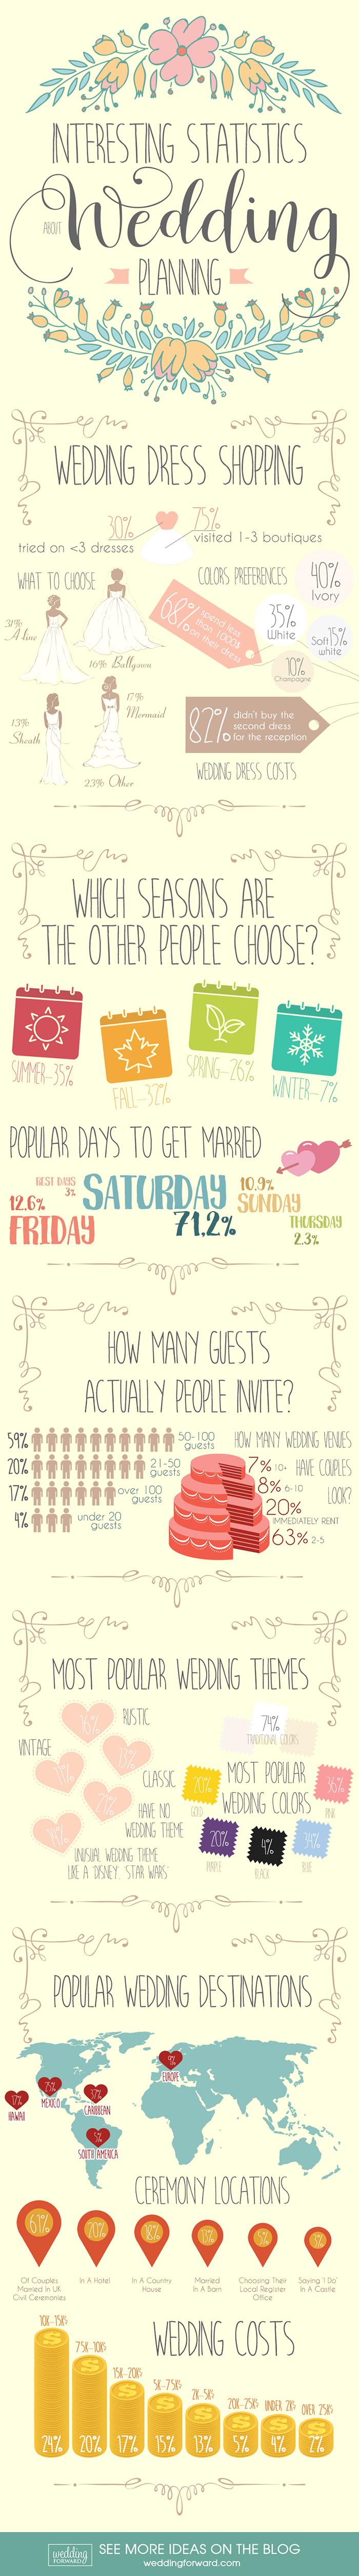 wedding trivia interesting facts statistics infographic